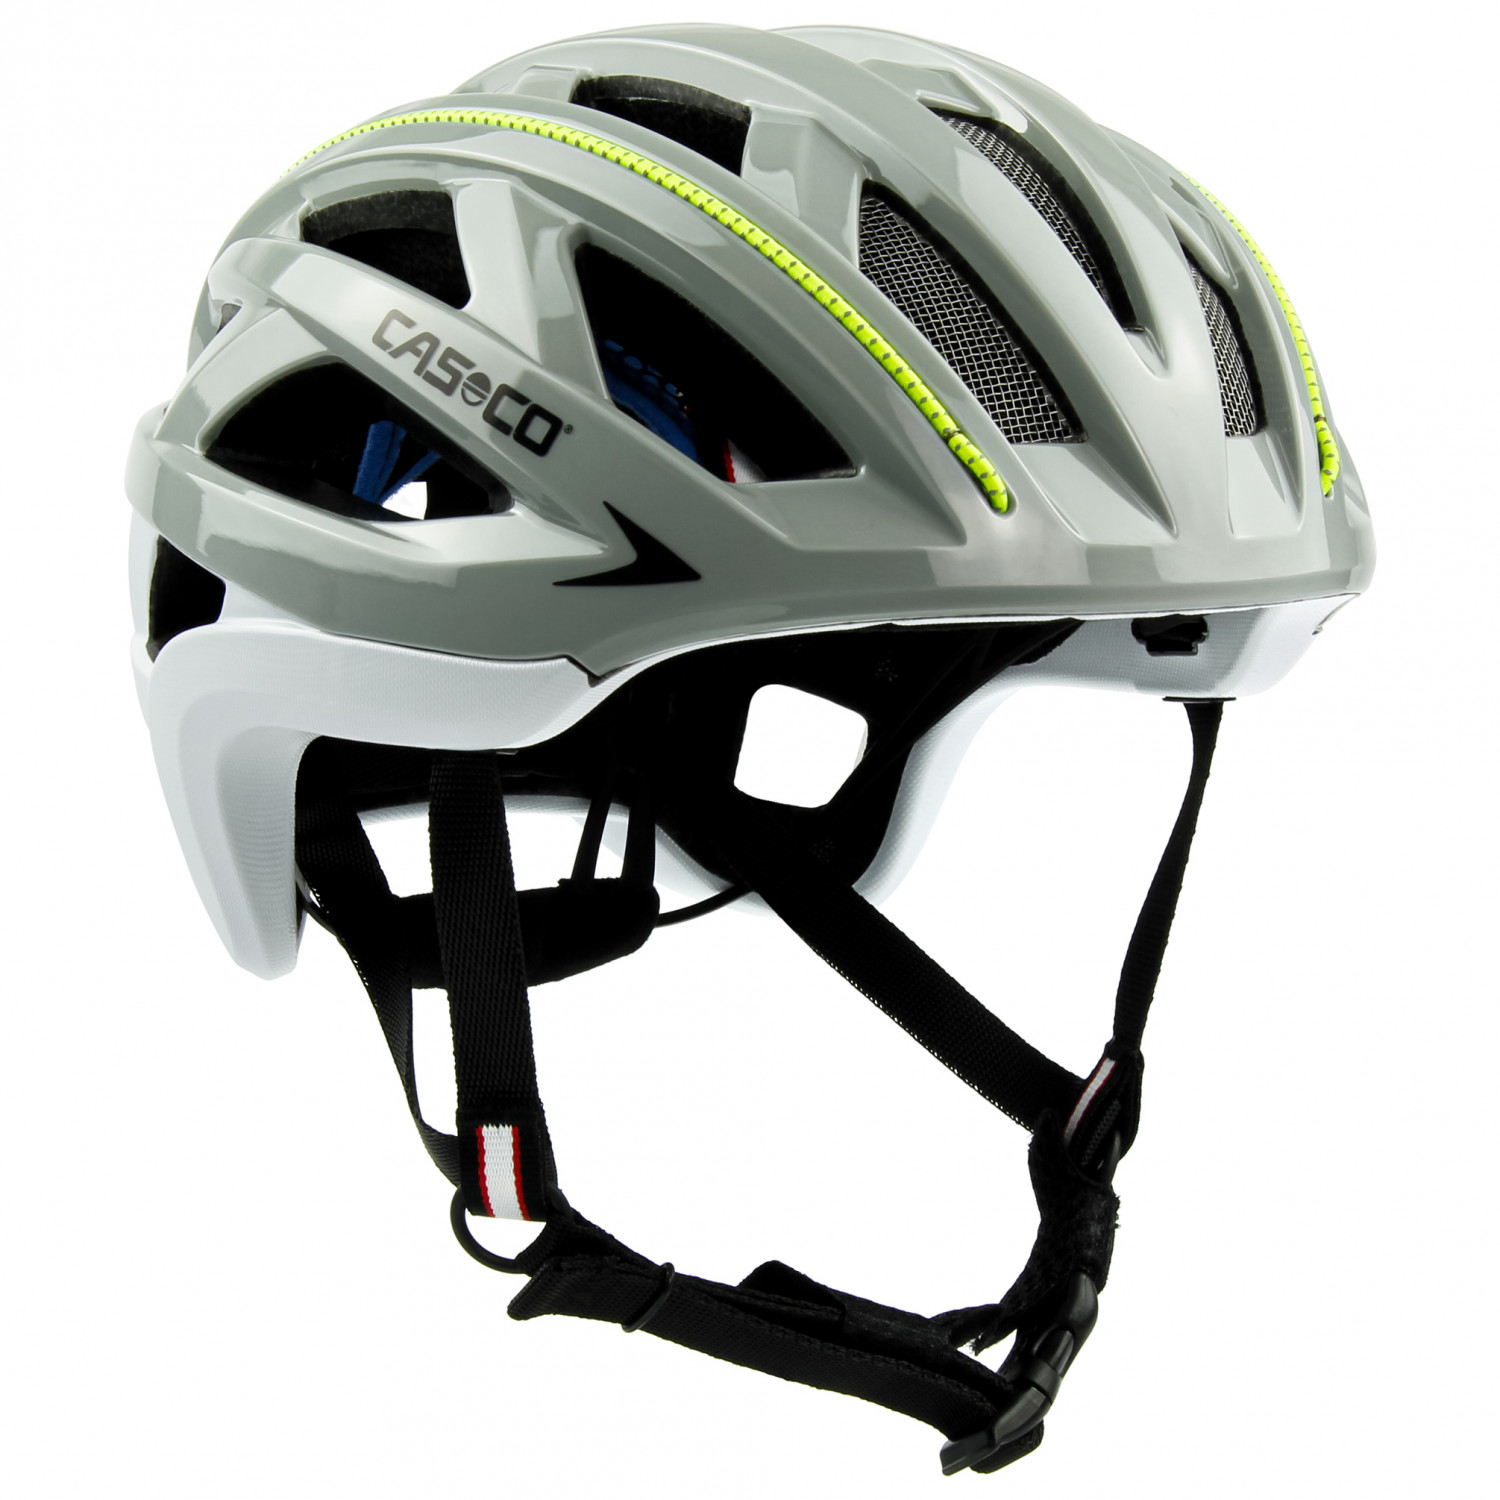 Велосипедный шлем Casco Cuda 2 Strada, цвет Grey/White/Neon